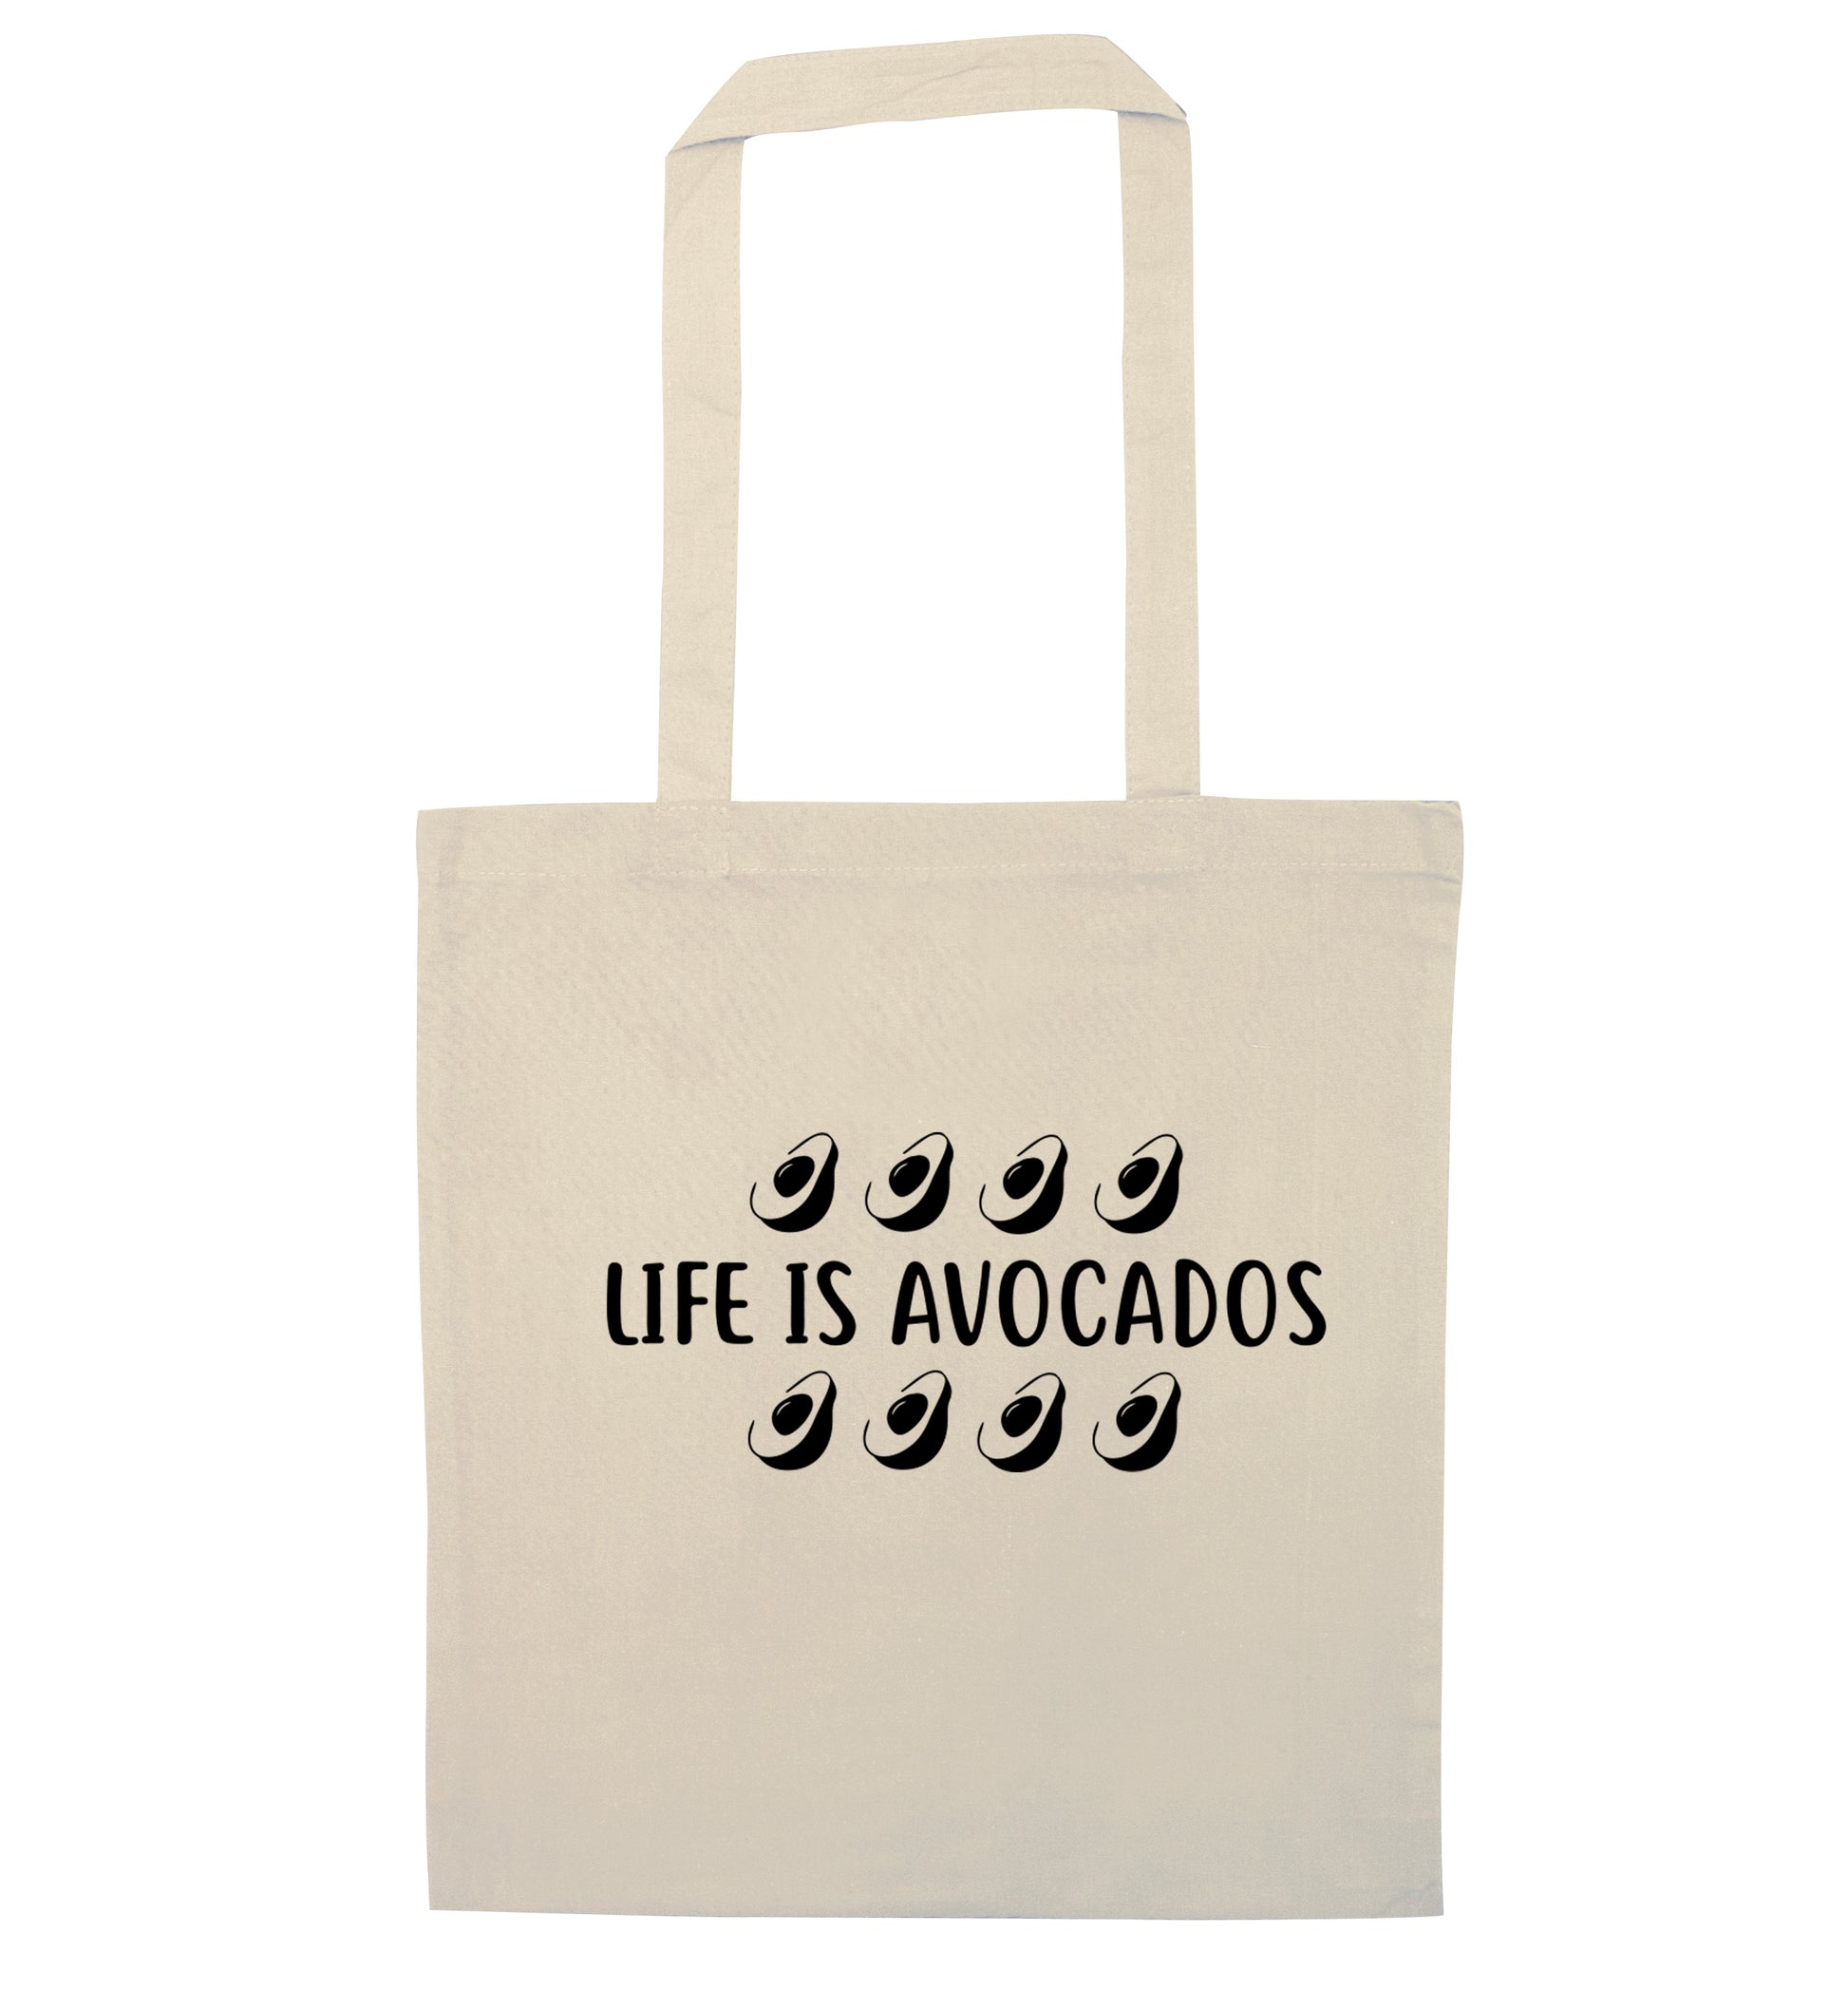 Life is avocados natural tote bag